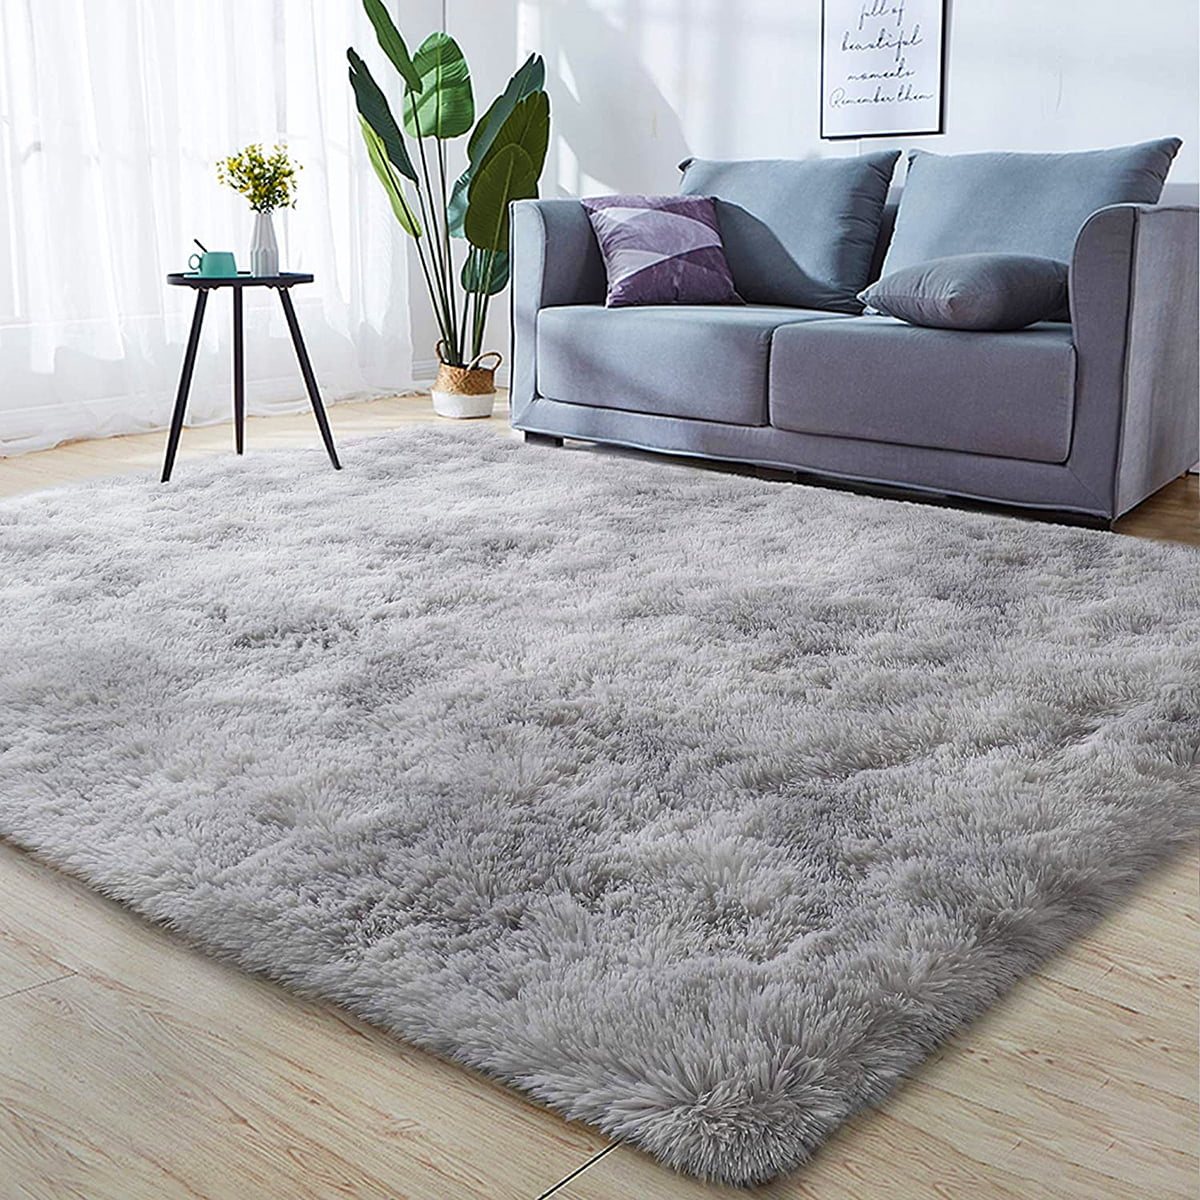 Mint Green Light Dark Grey Rugs Small Extra Large Living Room Soft Floor Carpet 